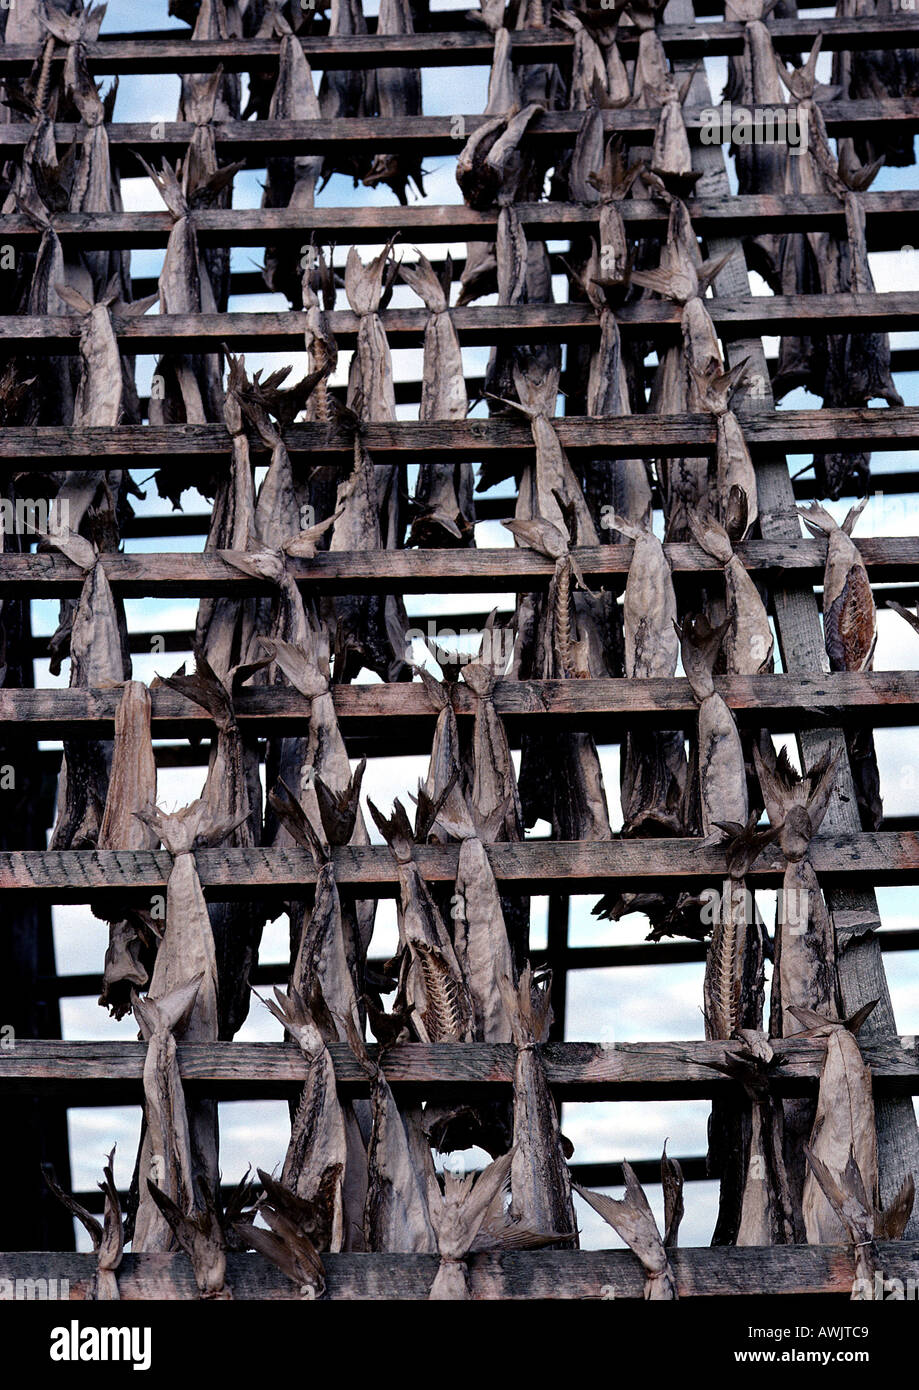 Norwegen, Fisch hängen zum Trocknen auf Holzgestell, full-frame Stockfoto